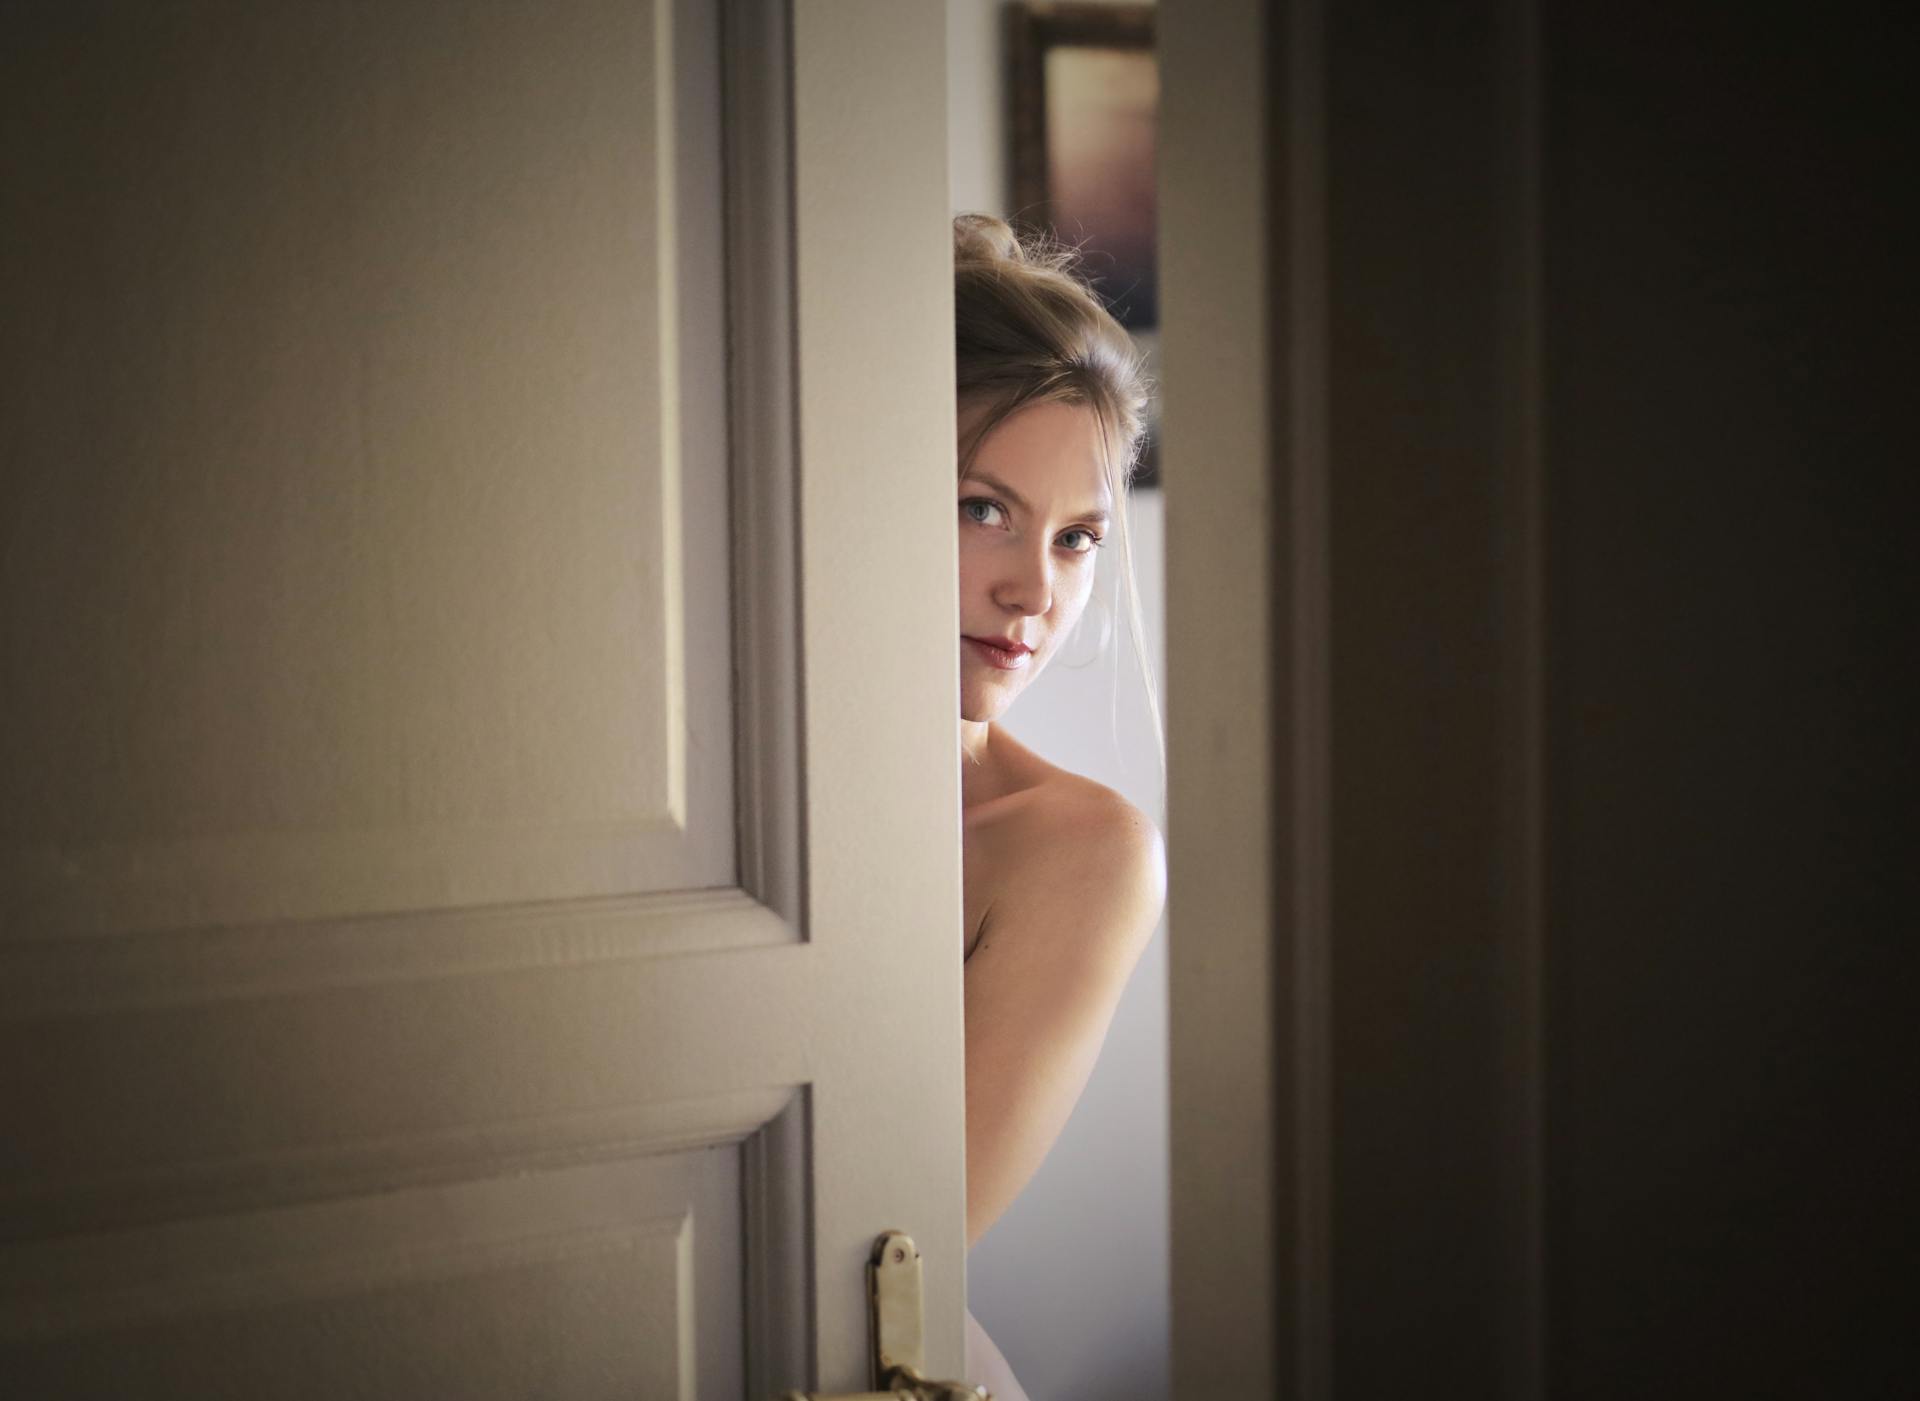 A woman peaking from behind the door | Source: Pexels